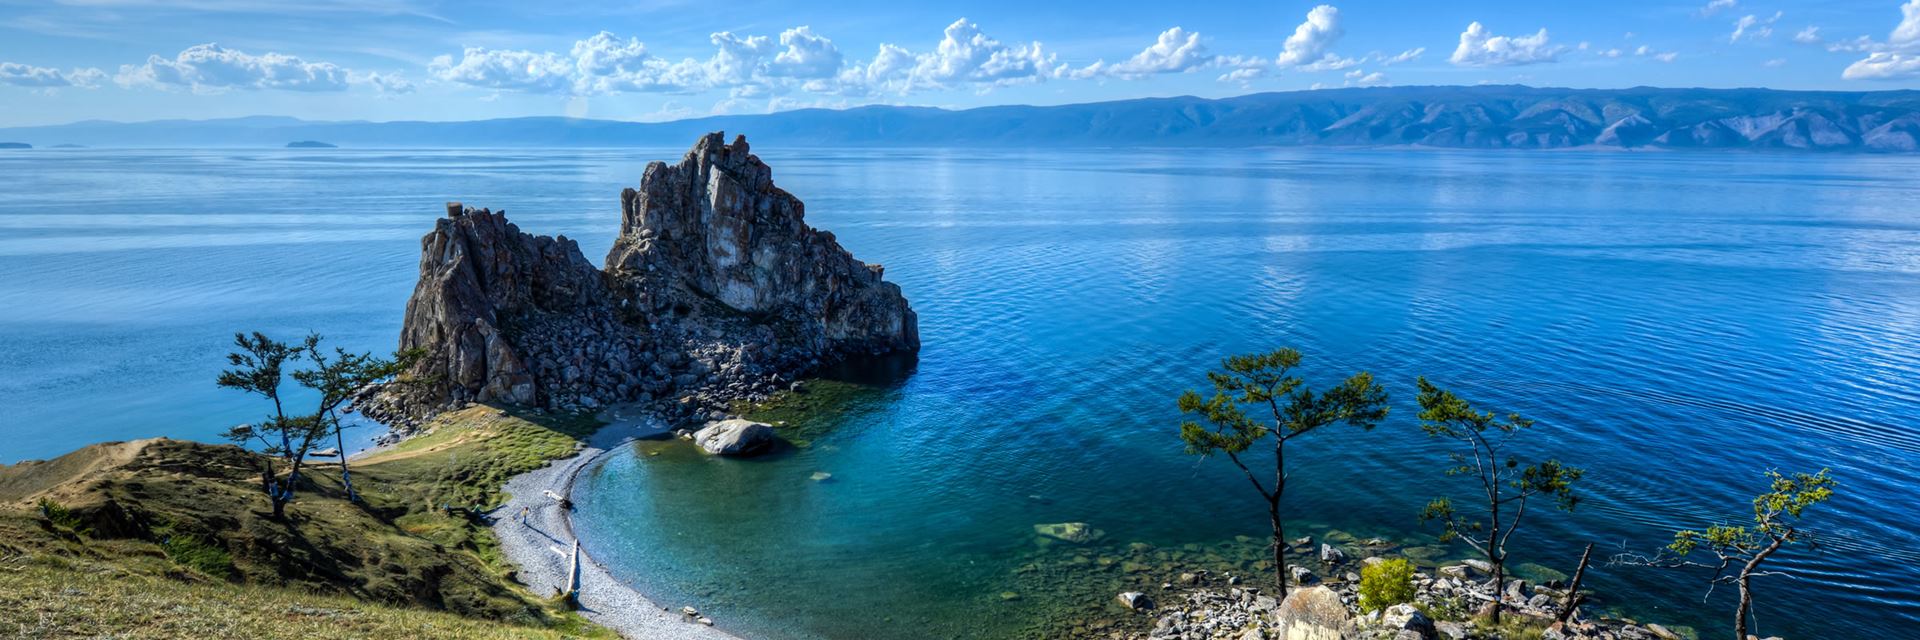 [Image: iStock471952853_Lake_Baikal_800c2400_new.jpg]